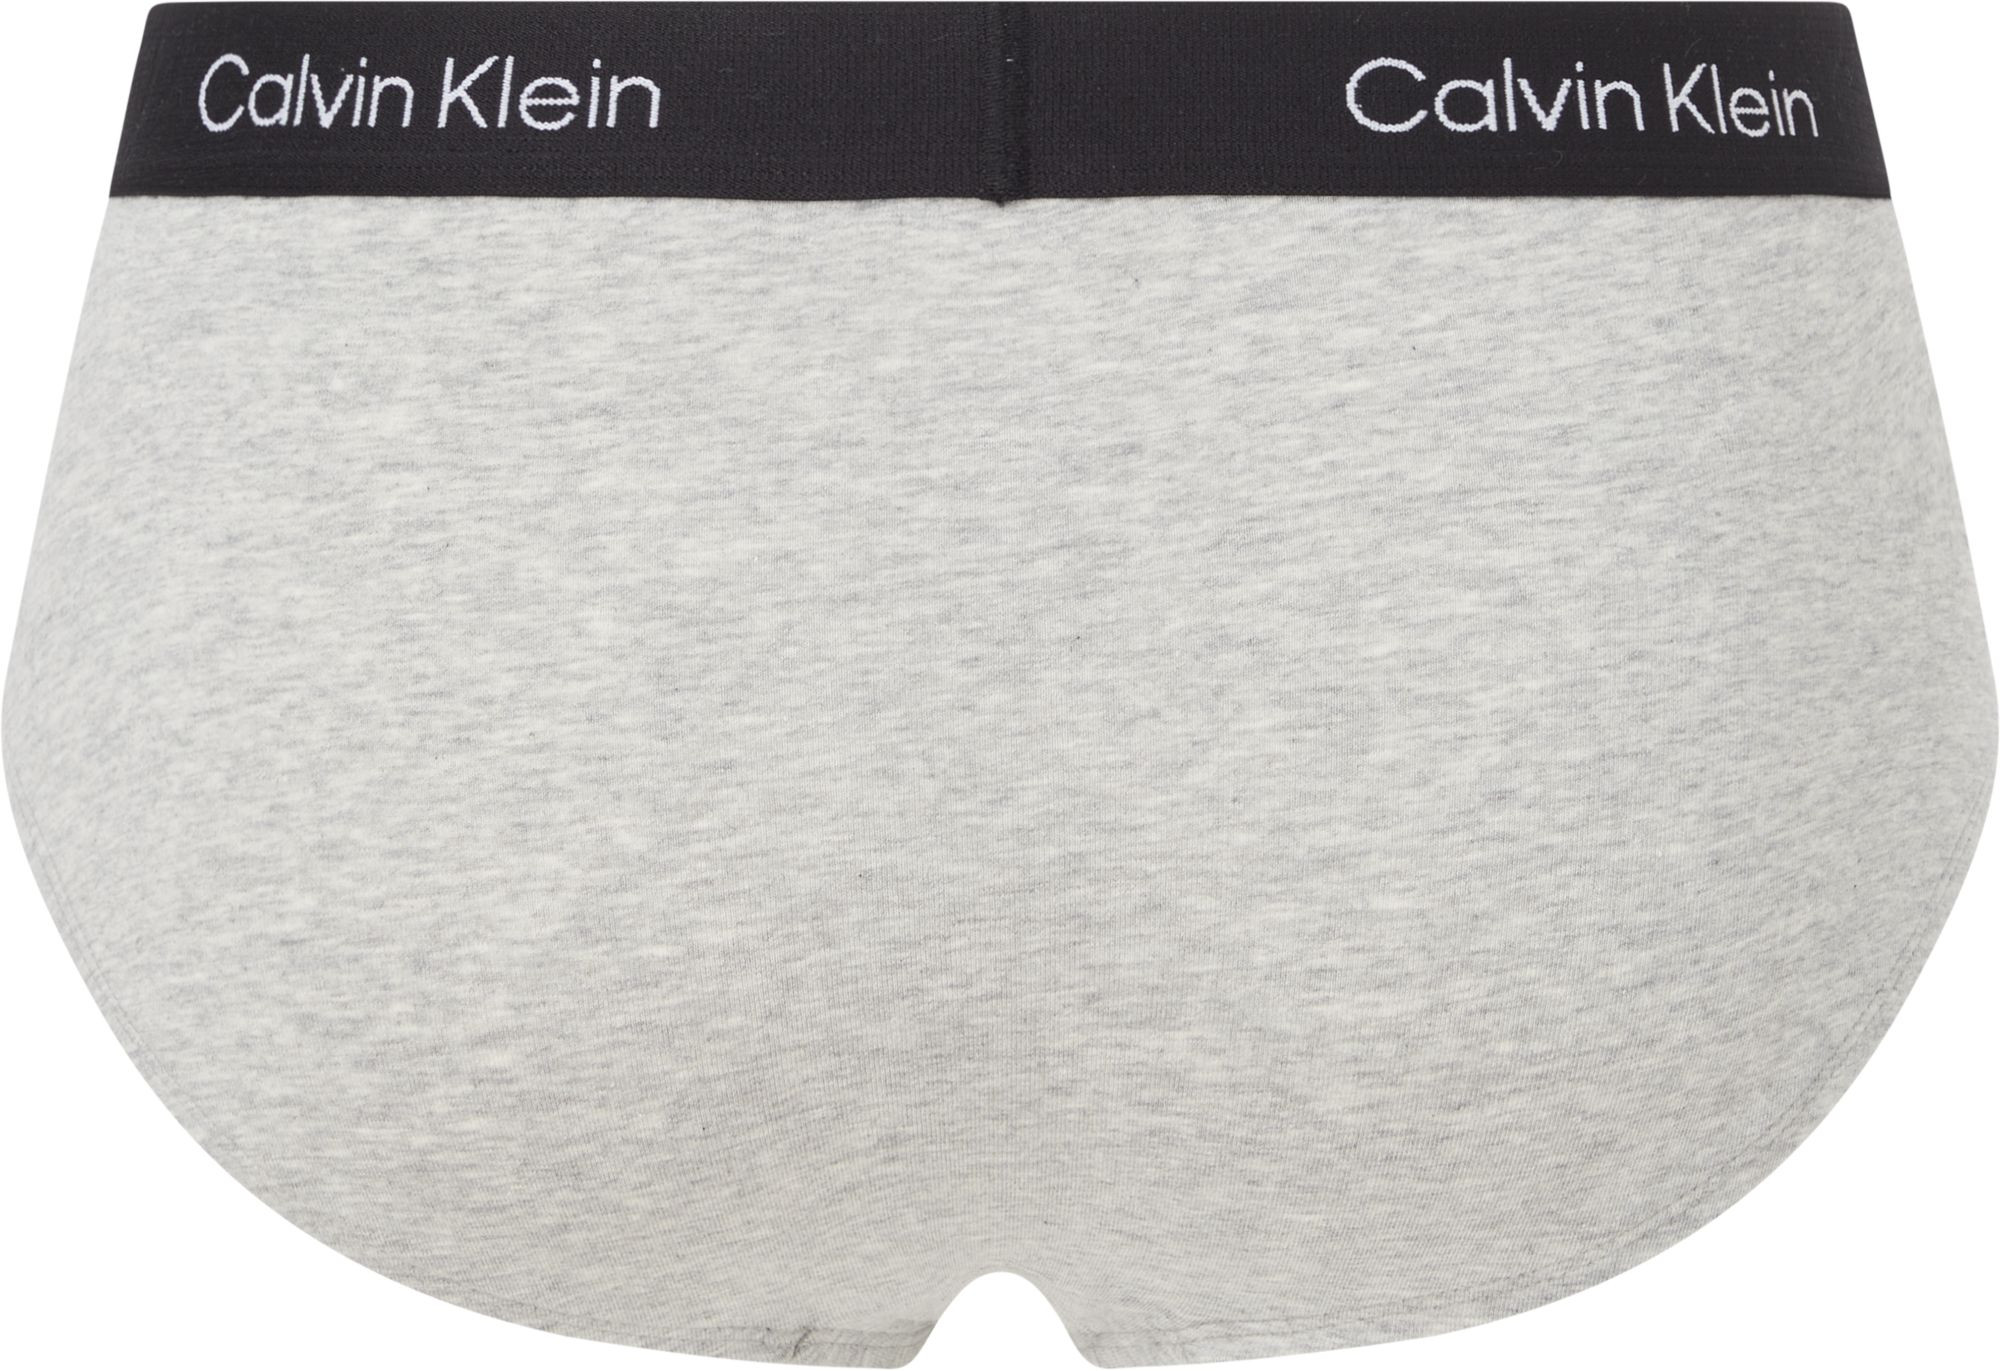 Pánské slipy 3 Pack Briefs CK96 000NB3527A6H3 černá/bílá/šedá - Calvin Klein L